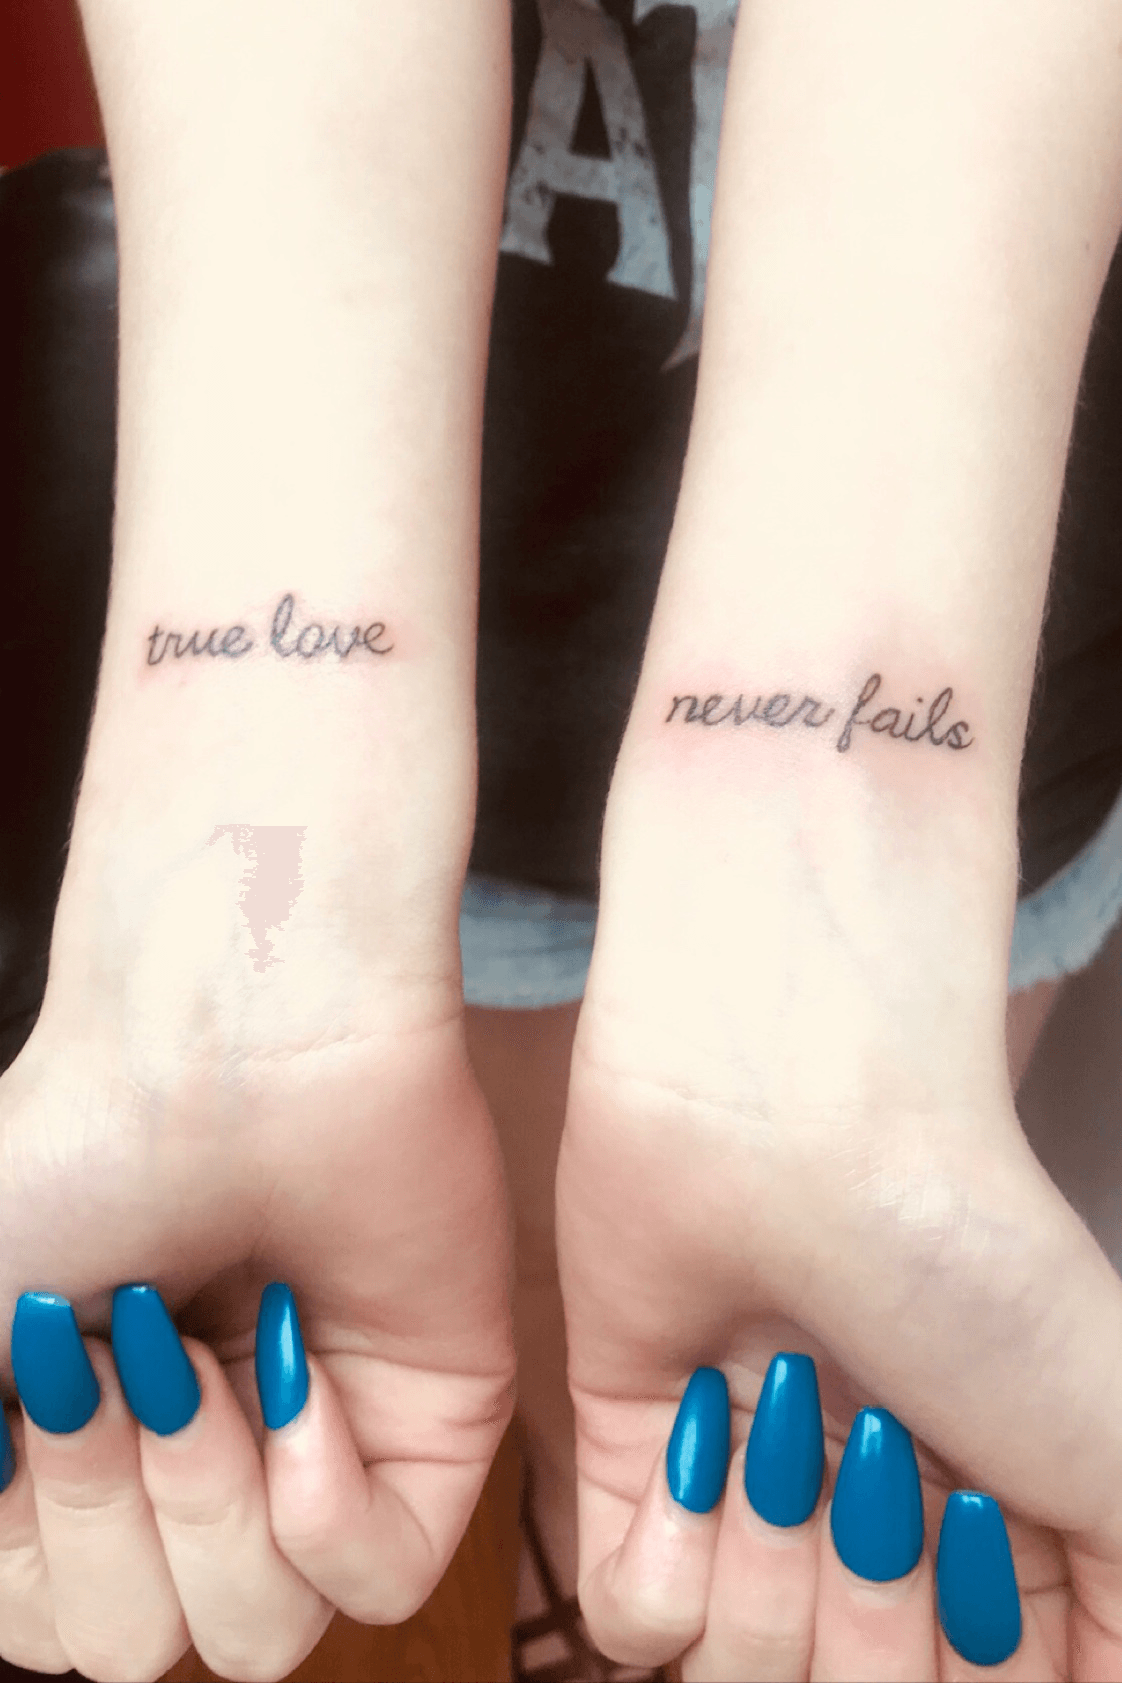 Thug Paiva Tattoo - Your love never fails